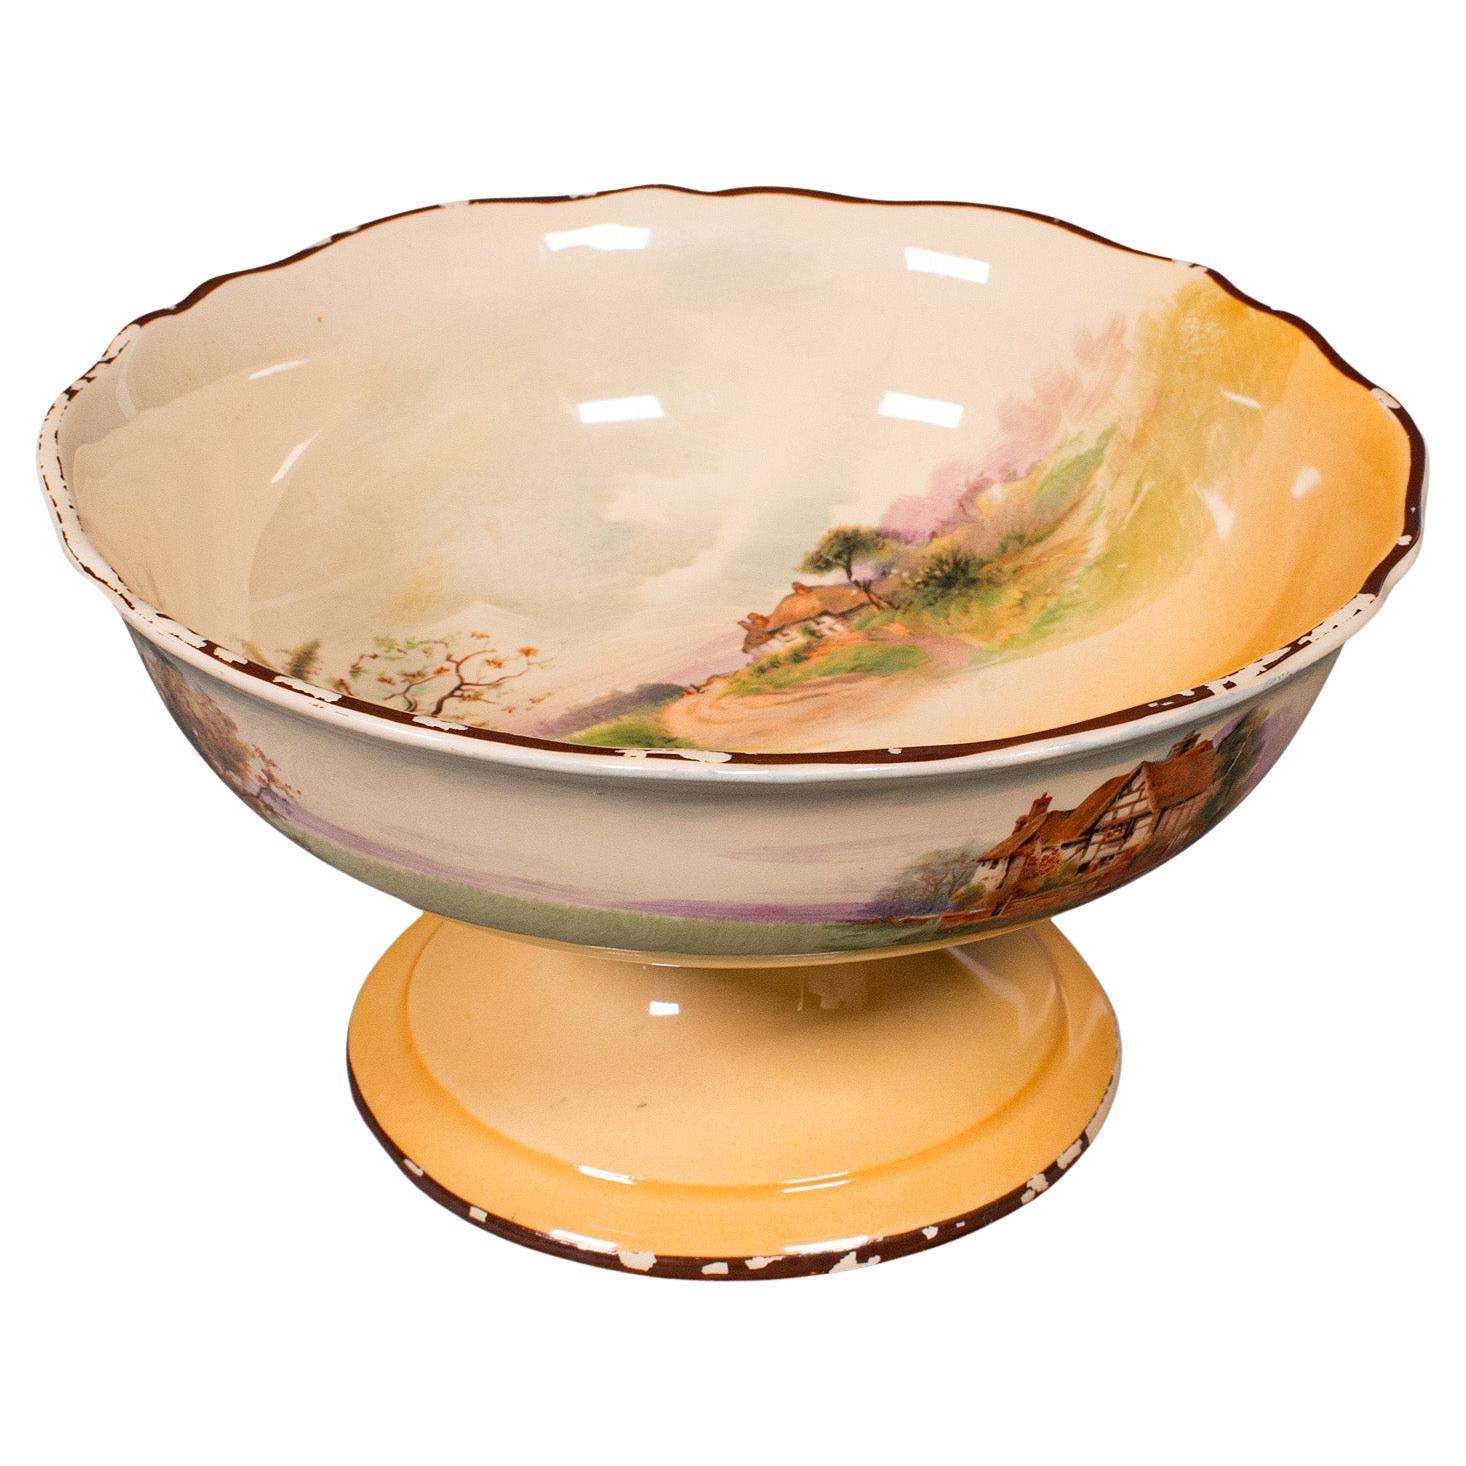 https://a.1stdibscdn.com/vintage-decorative-footed-bowl-english-ceramic-serving-dish-fruitbowl-1930-for-sale/f_26453/f_320254421672740709634/f_32025442_1672740710272_bg_processed.jpg